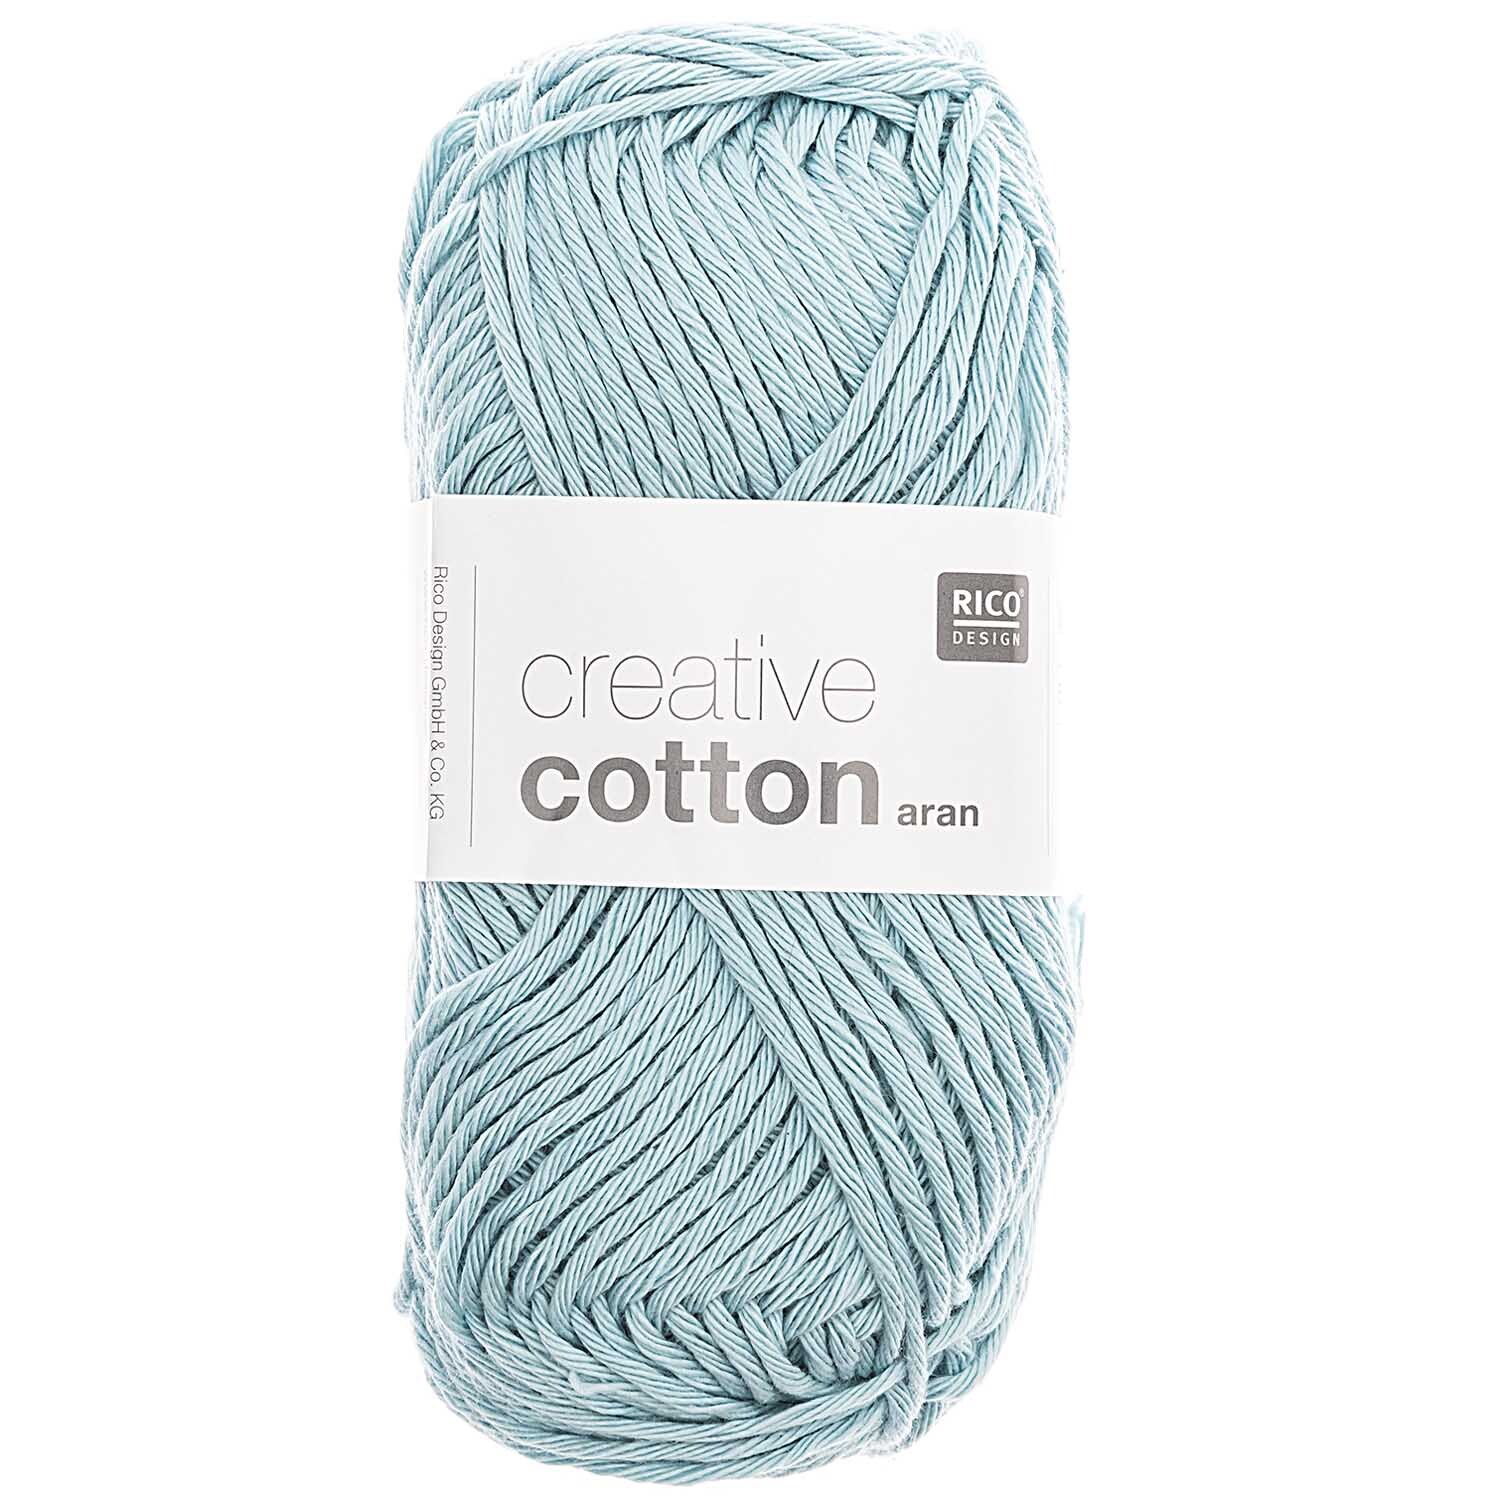 Creative Cotton aran